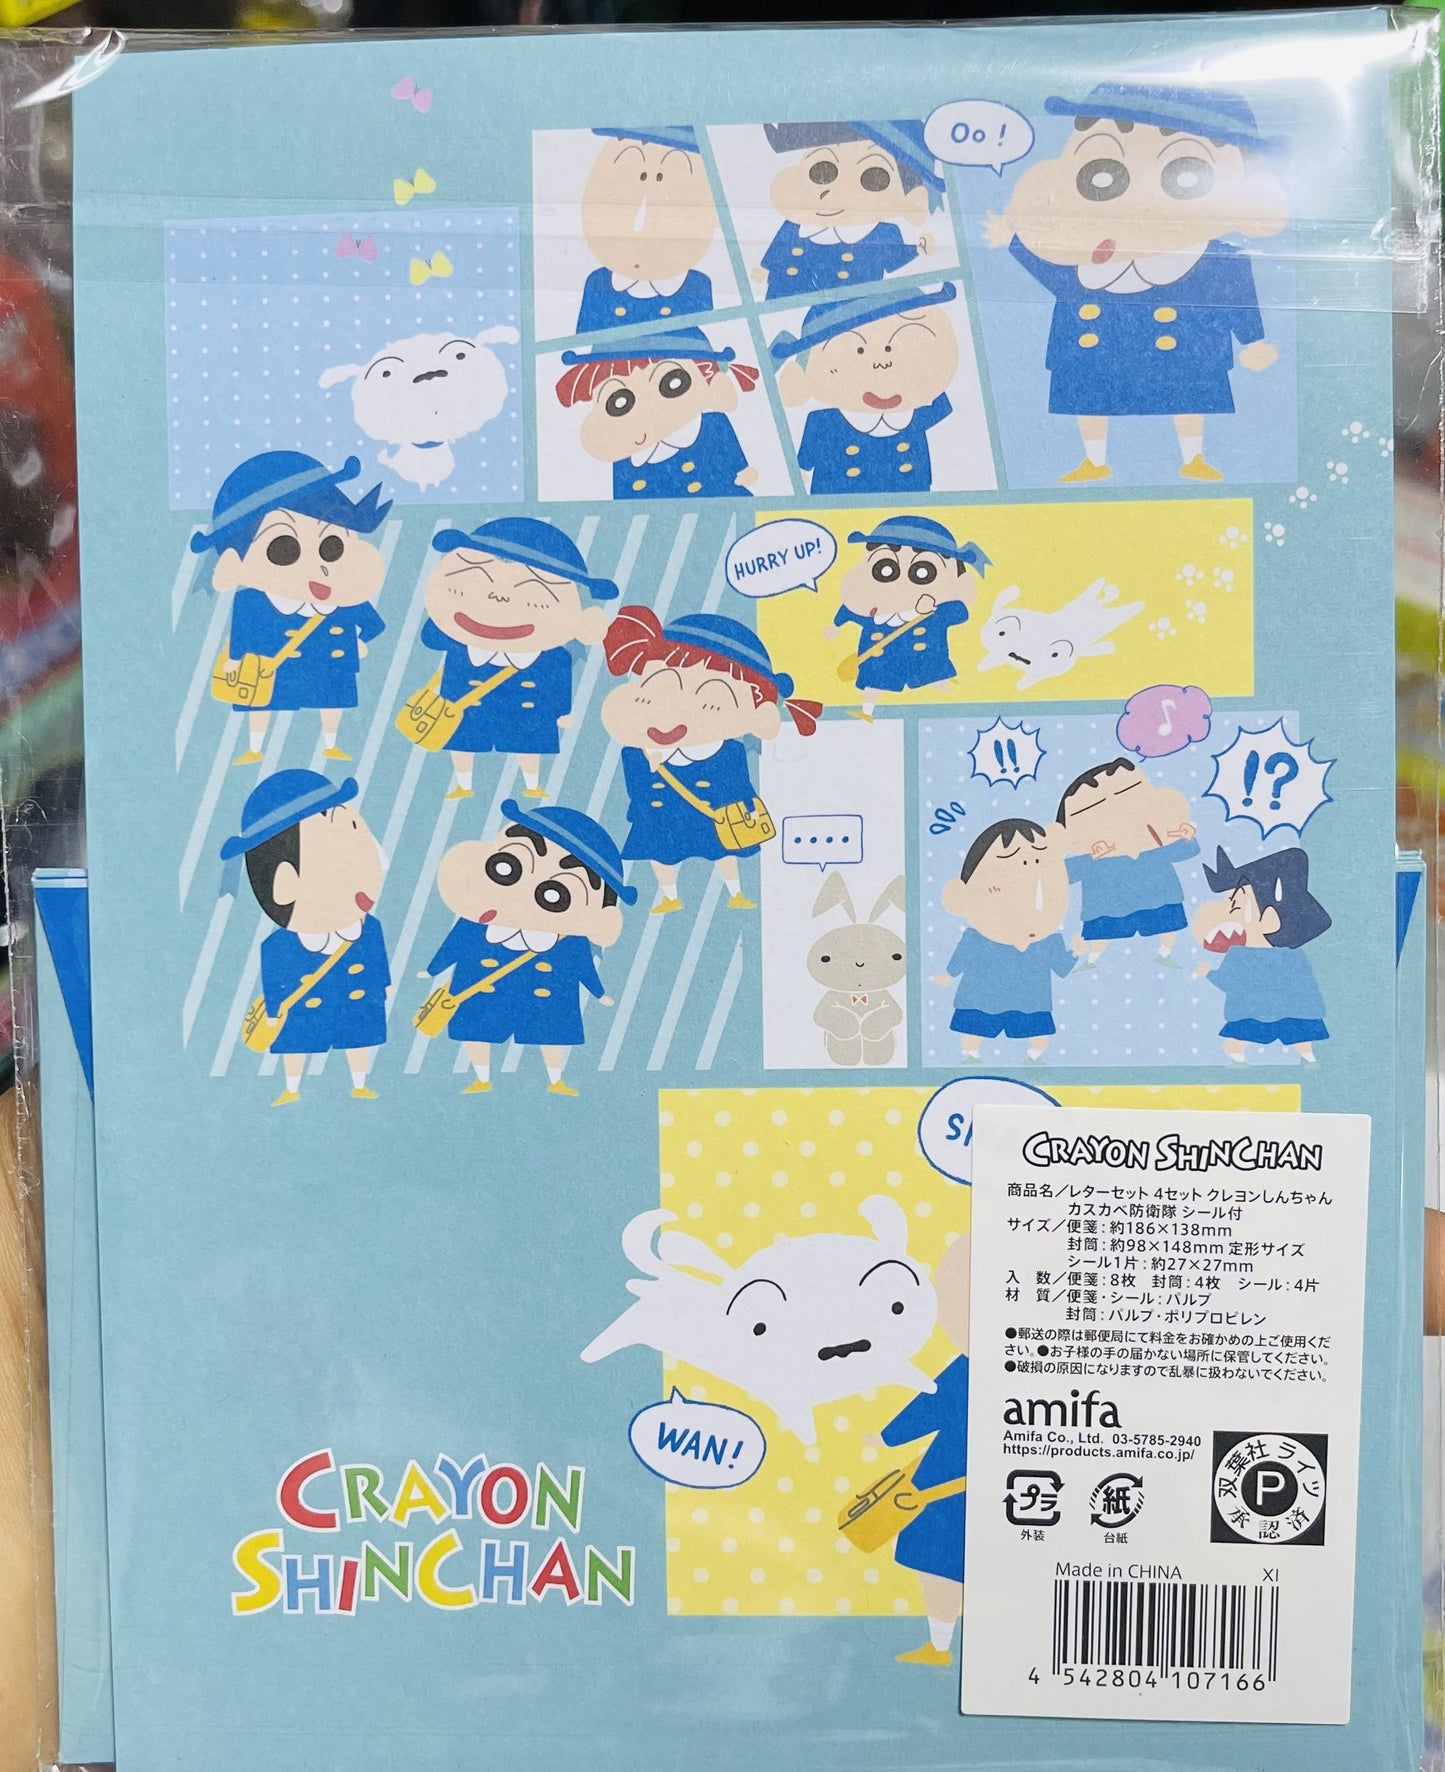 Letter Set Crayon Shinchan